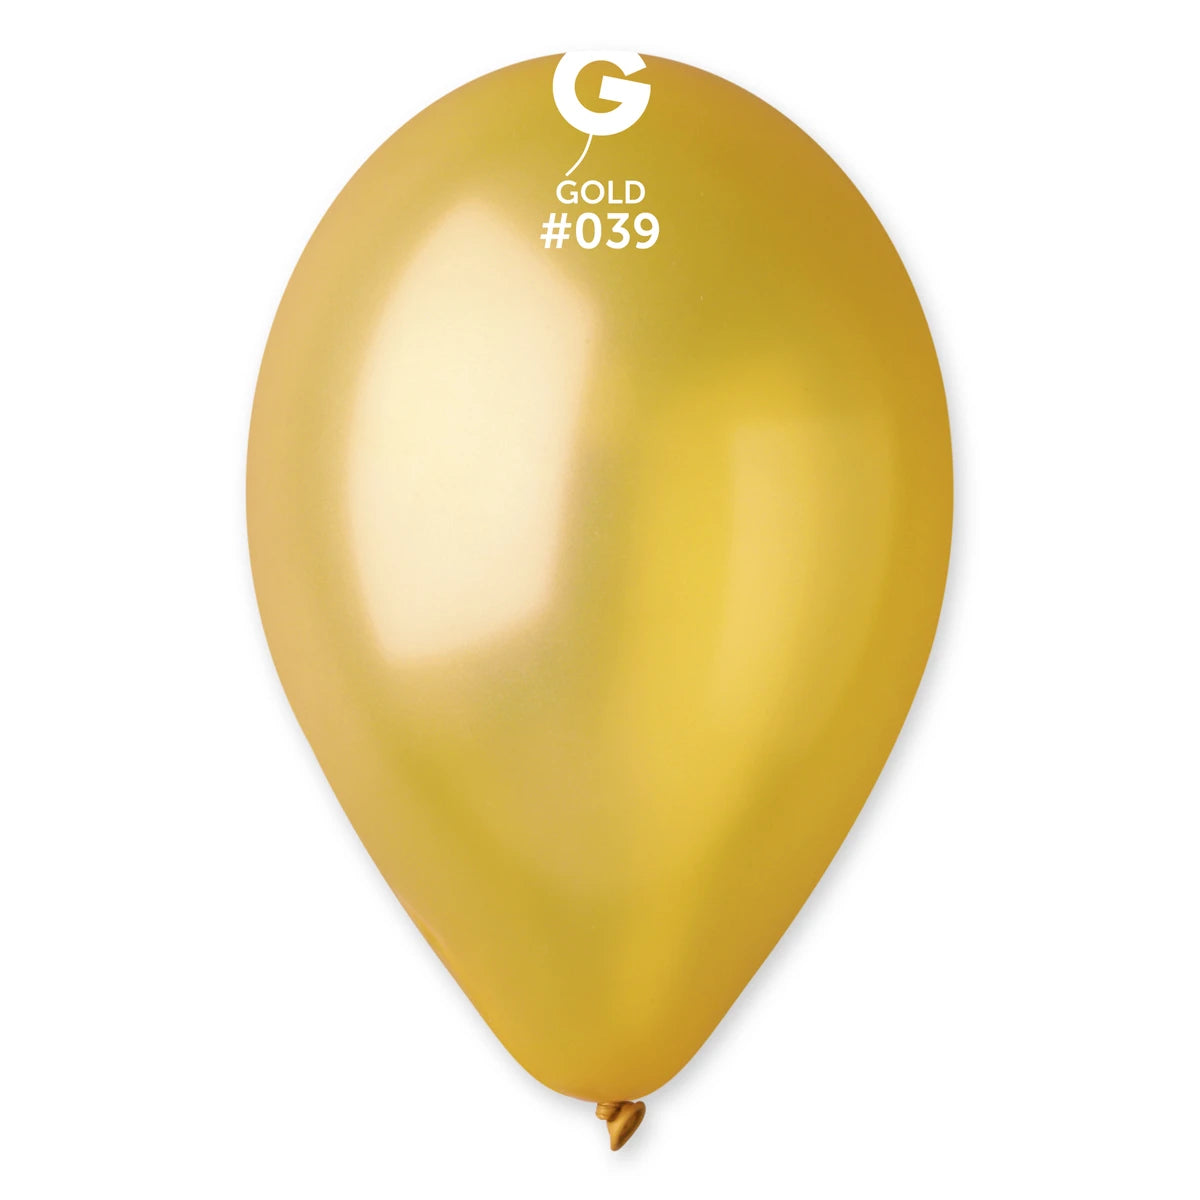 Metallic Balloon Gold #039 SIZE 5" 12" 19" 31"